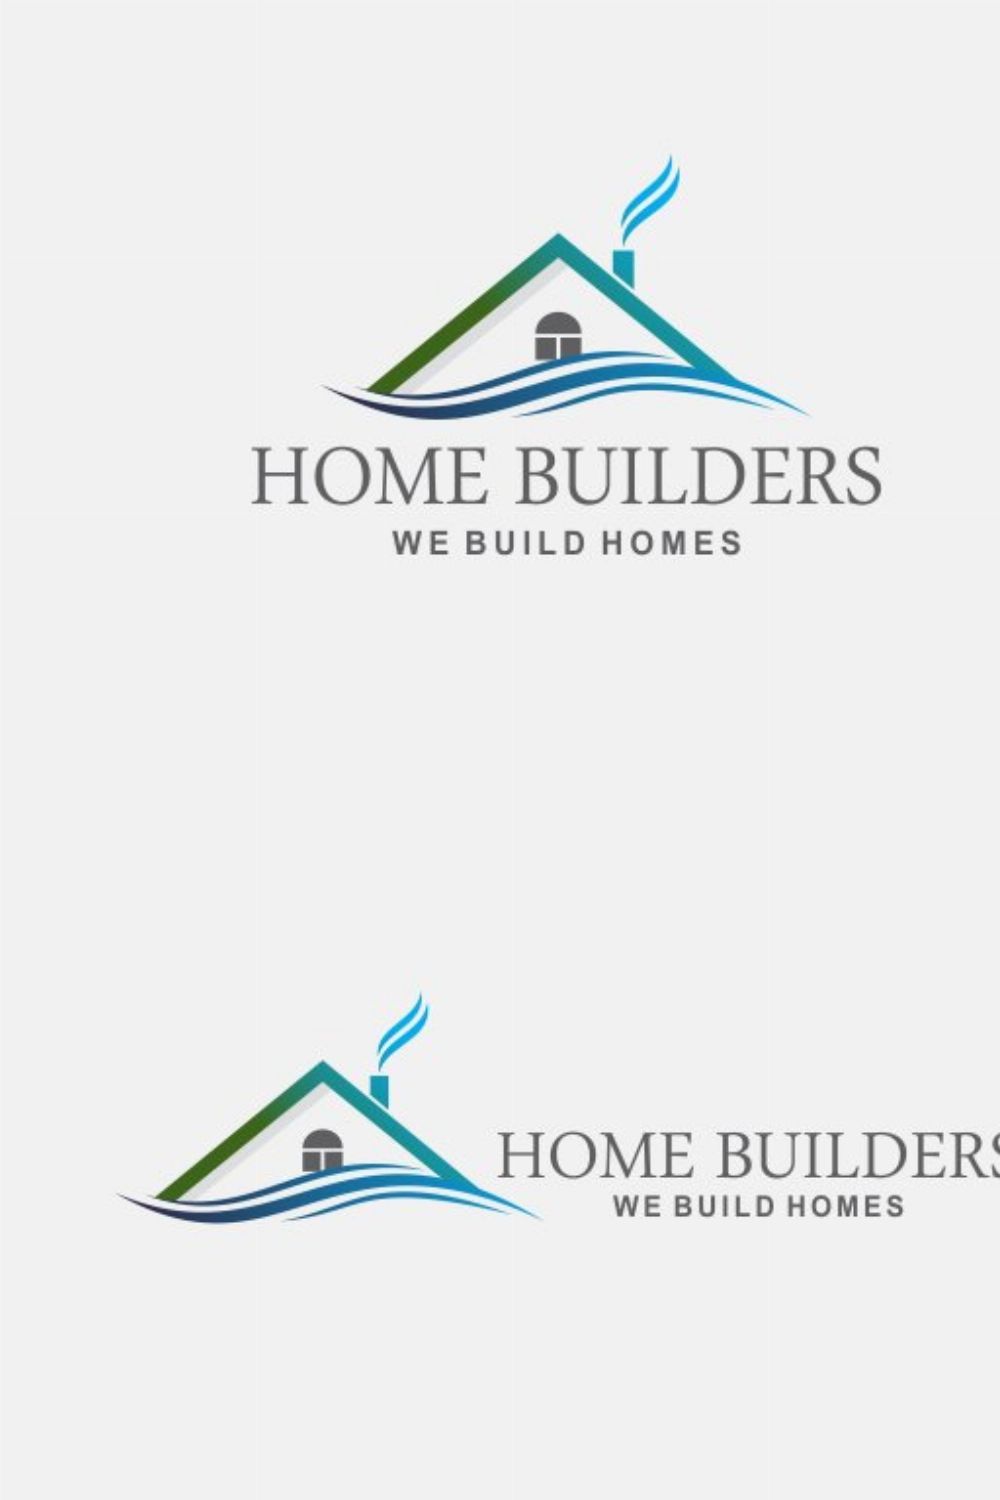 Home Builders Logo V2 pinterest preview image.